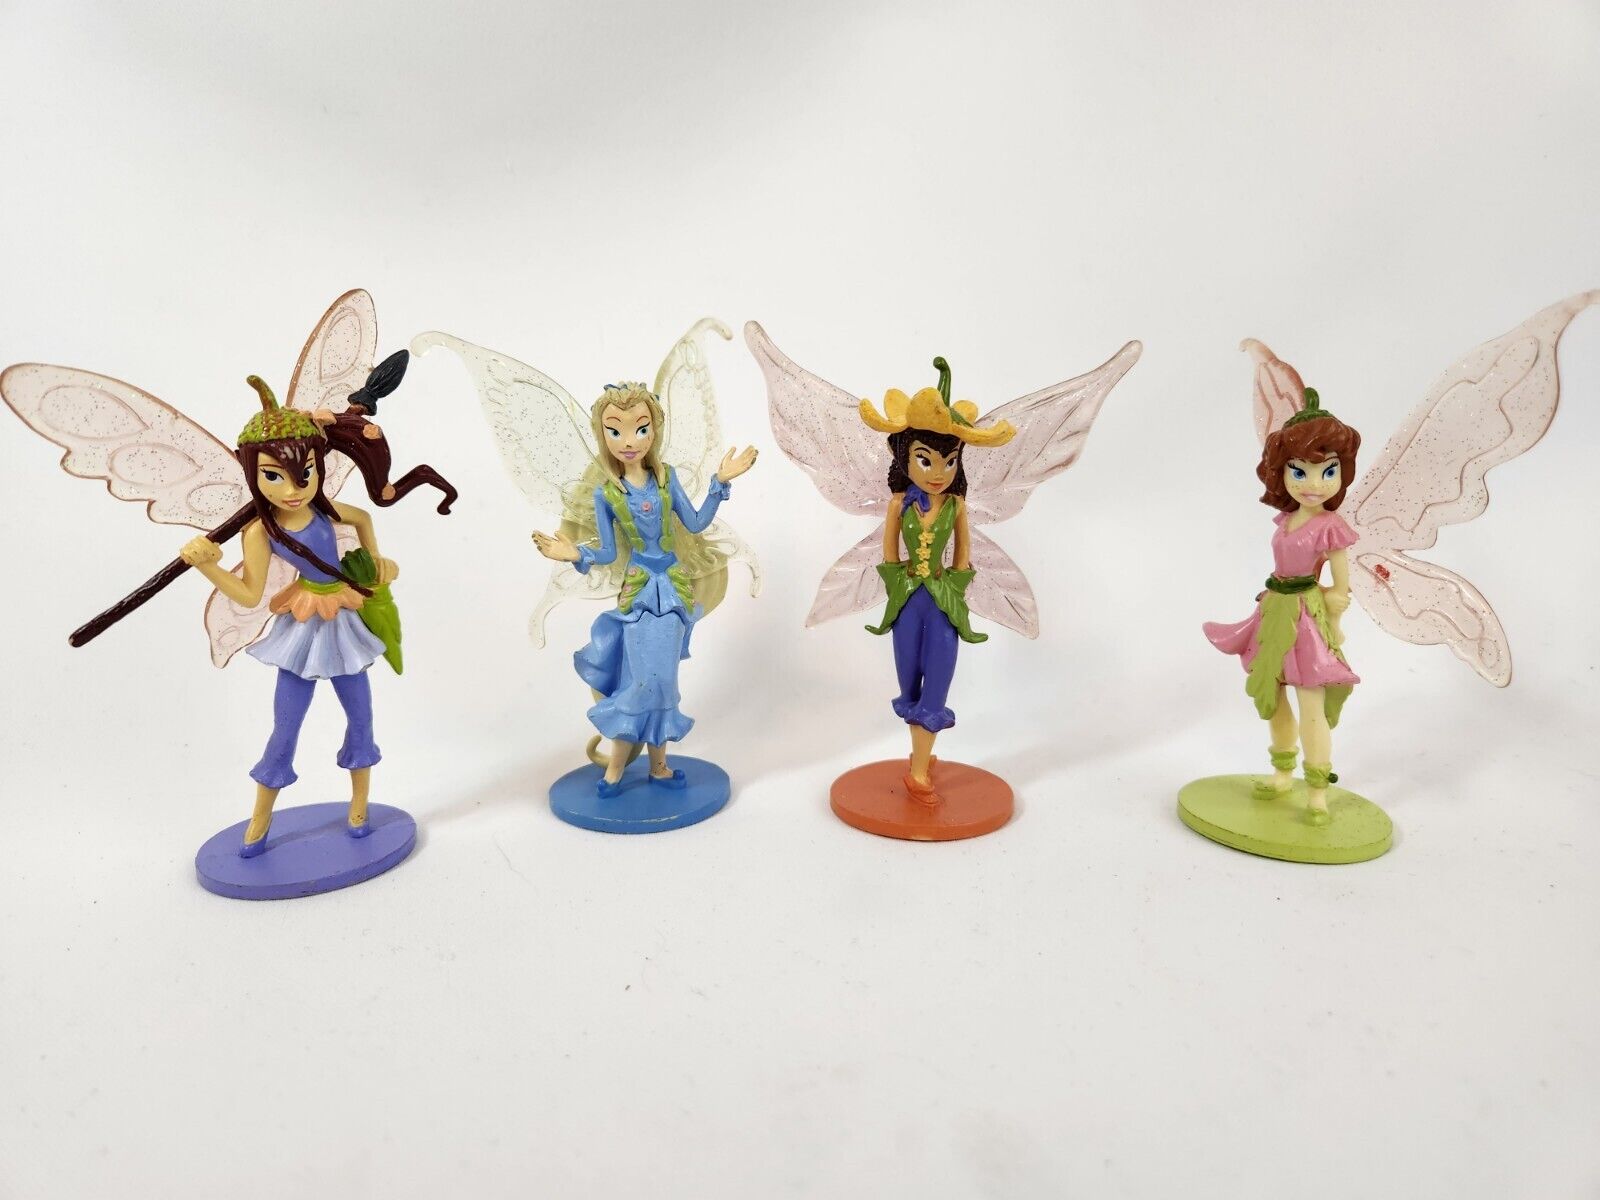 Disney Store Pixie Hollow Fairies Figurine Playset 4 Figures